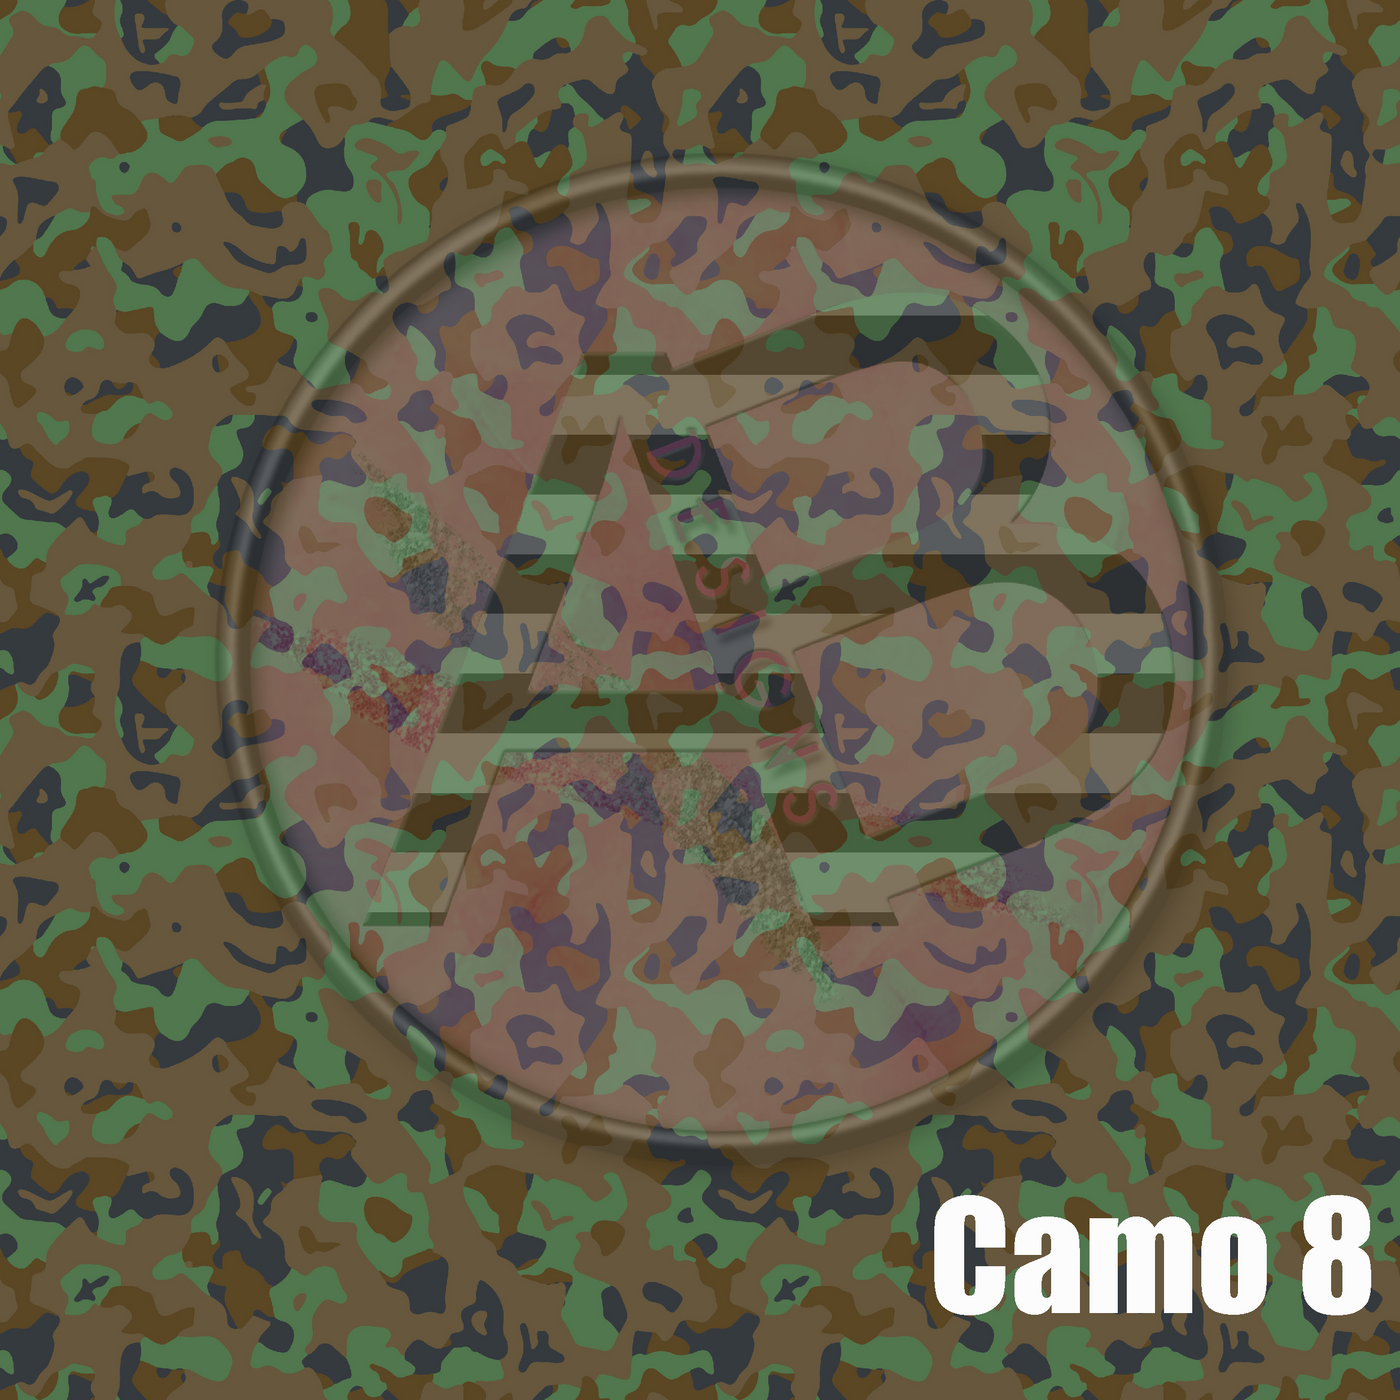 Adhesive Patterned Vinyl - Camo 8